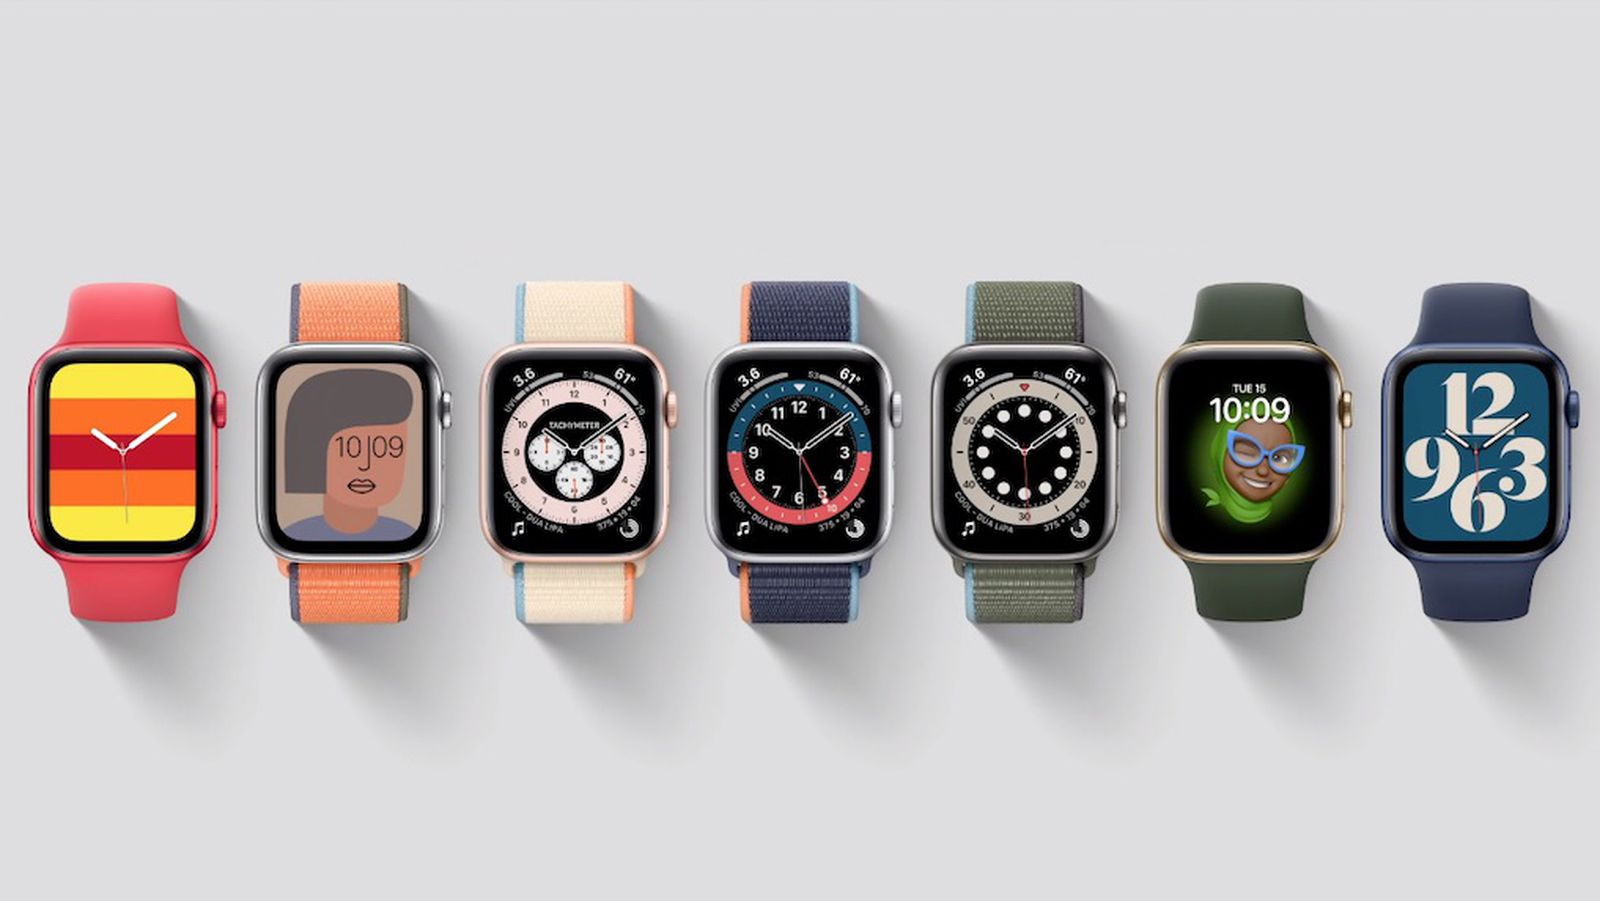 Thiết kế của Apple Watch Series 6